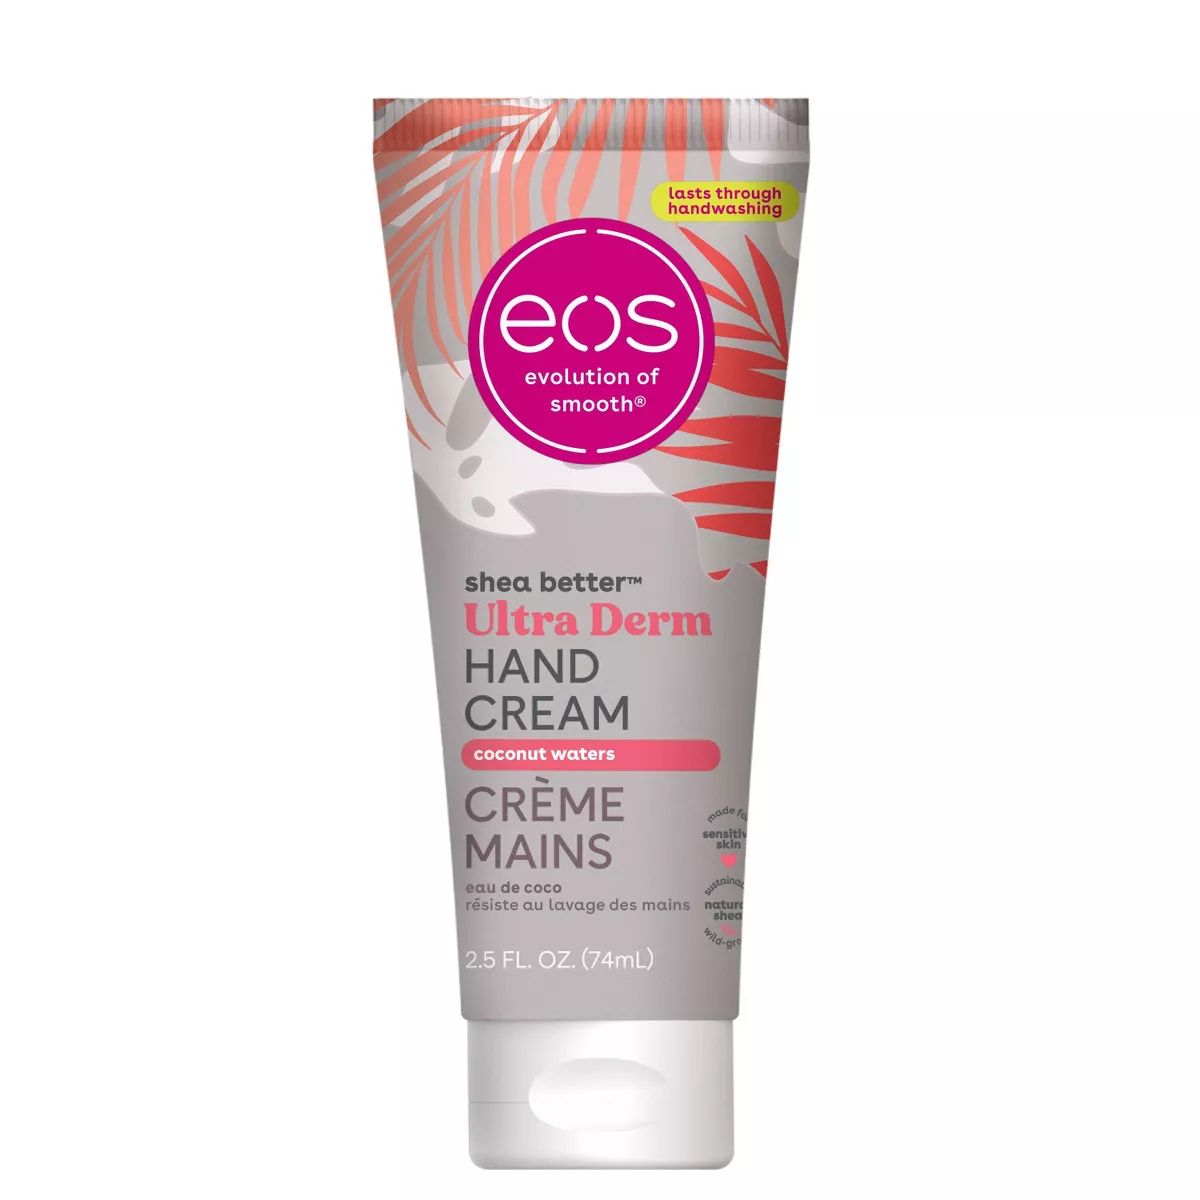 eos Shea Better Coconut Water Hand Cream - 2.5 fl oz | Target